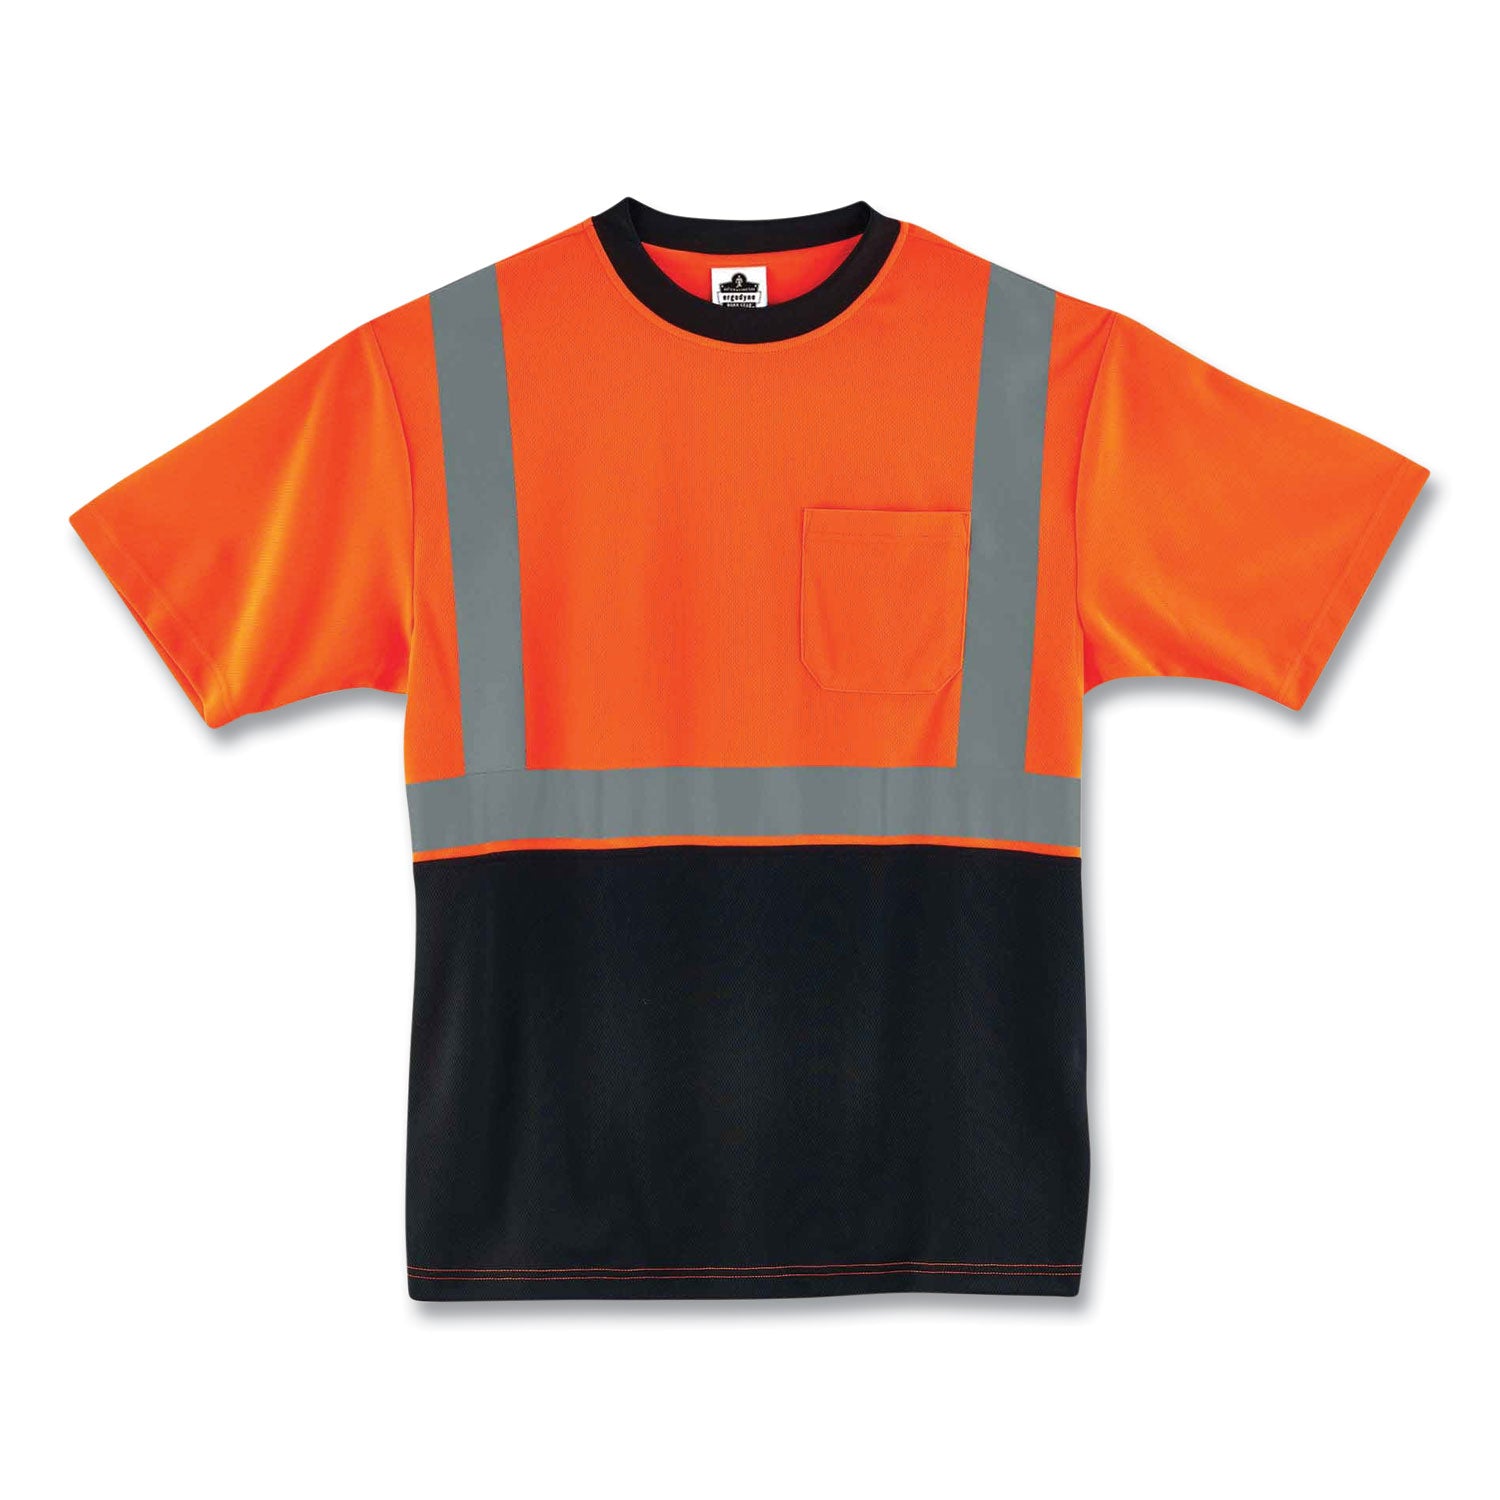 glowear-8289bk-class-2-hi-vis-t-shirt-with-black-bottom-4x-large-orange-ships-in-1-3-business-days_ego22518 - 1